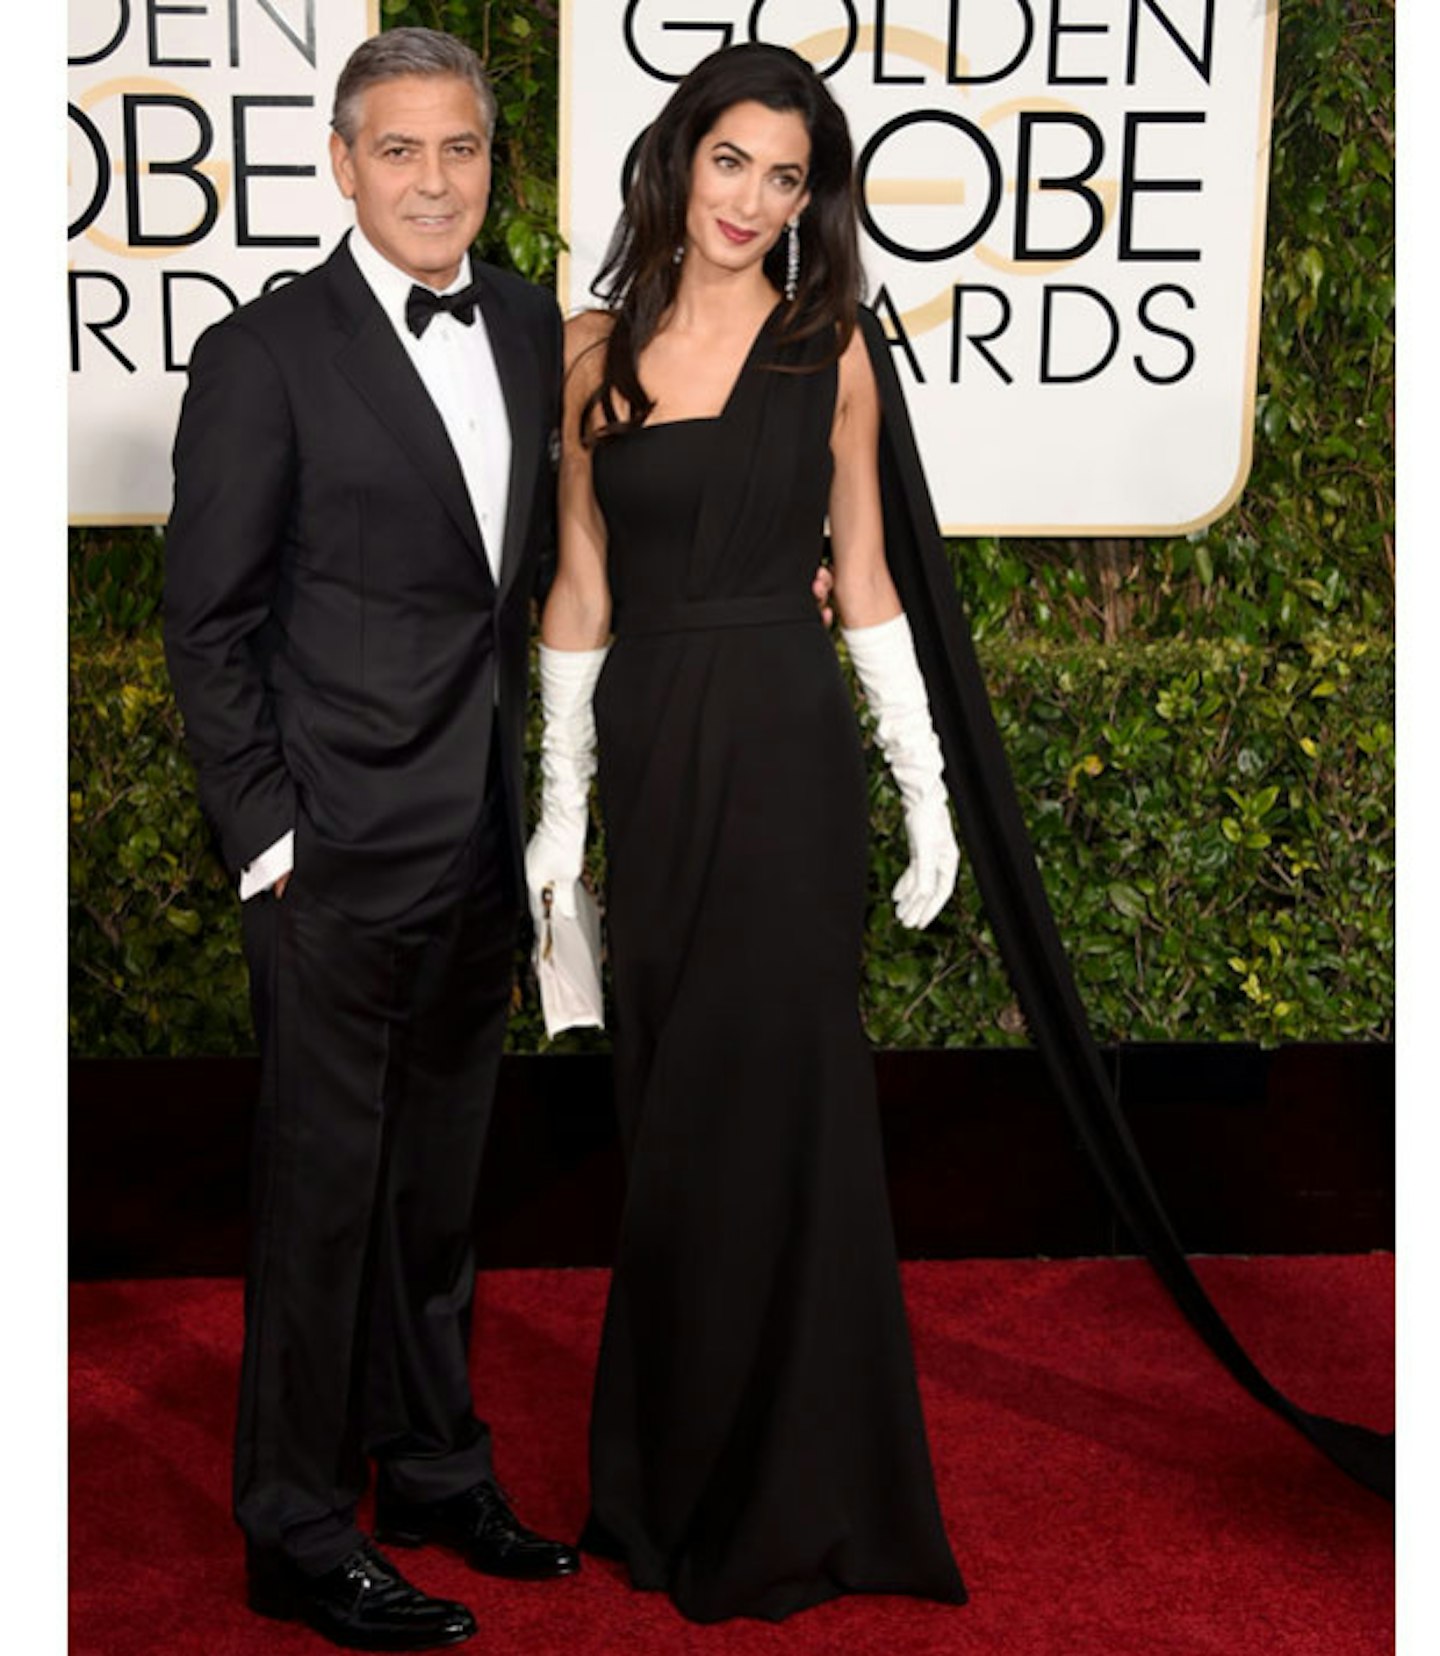 Georga Clooney and Amal Alamuddin Clooney